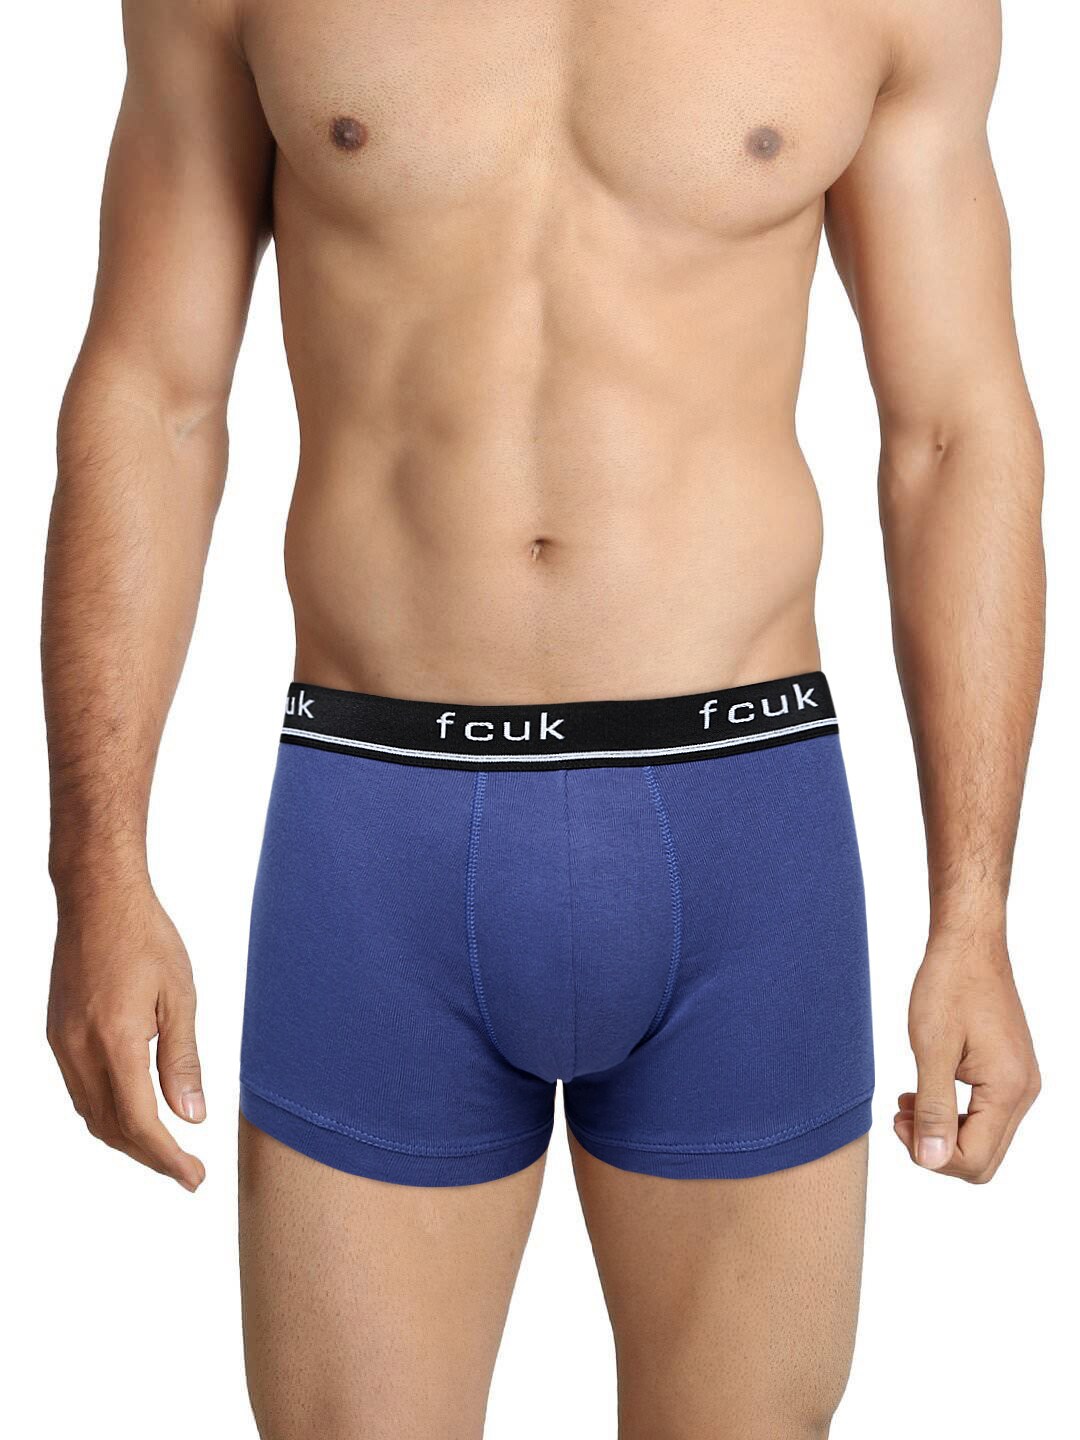 FCUK Underwear | Buy FCUK Underwear for Men Online in India at ...